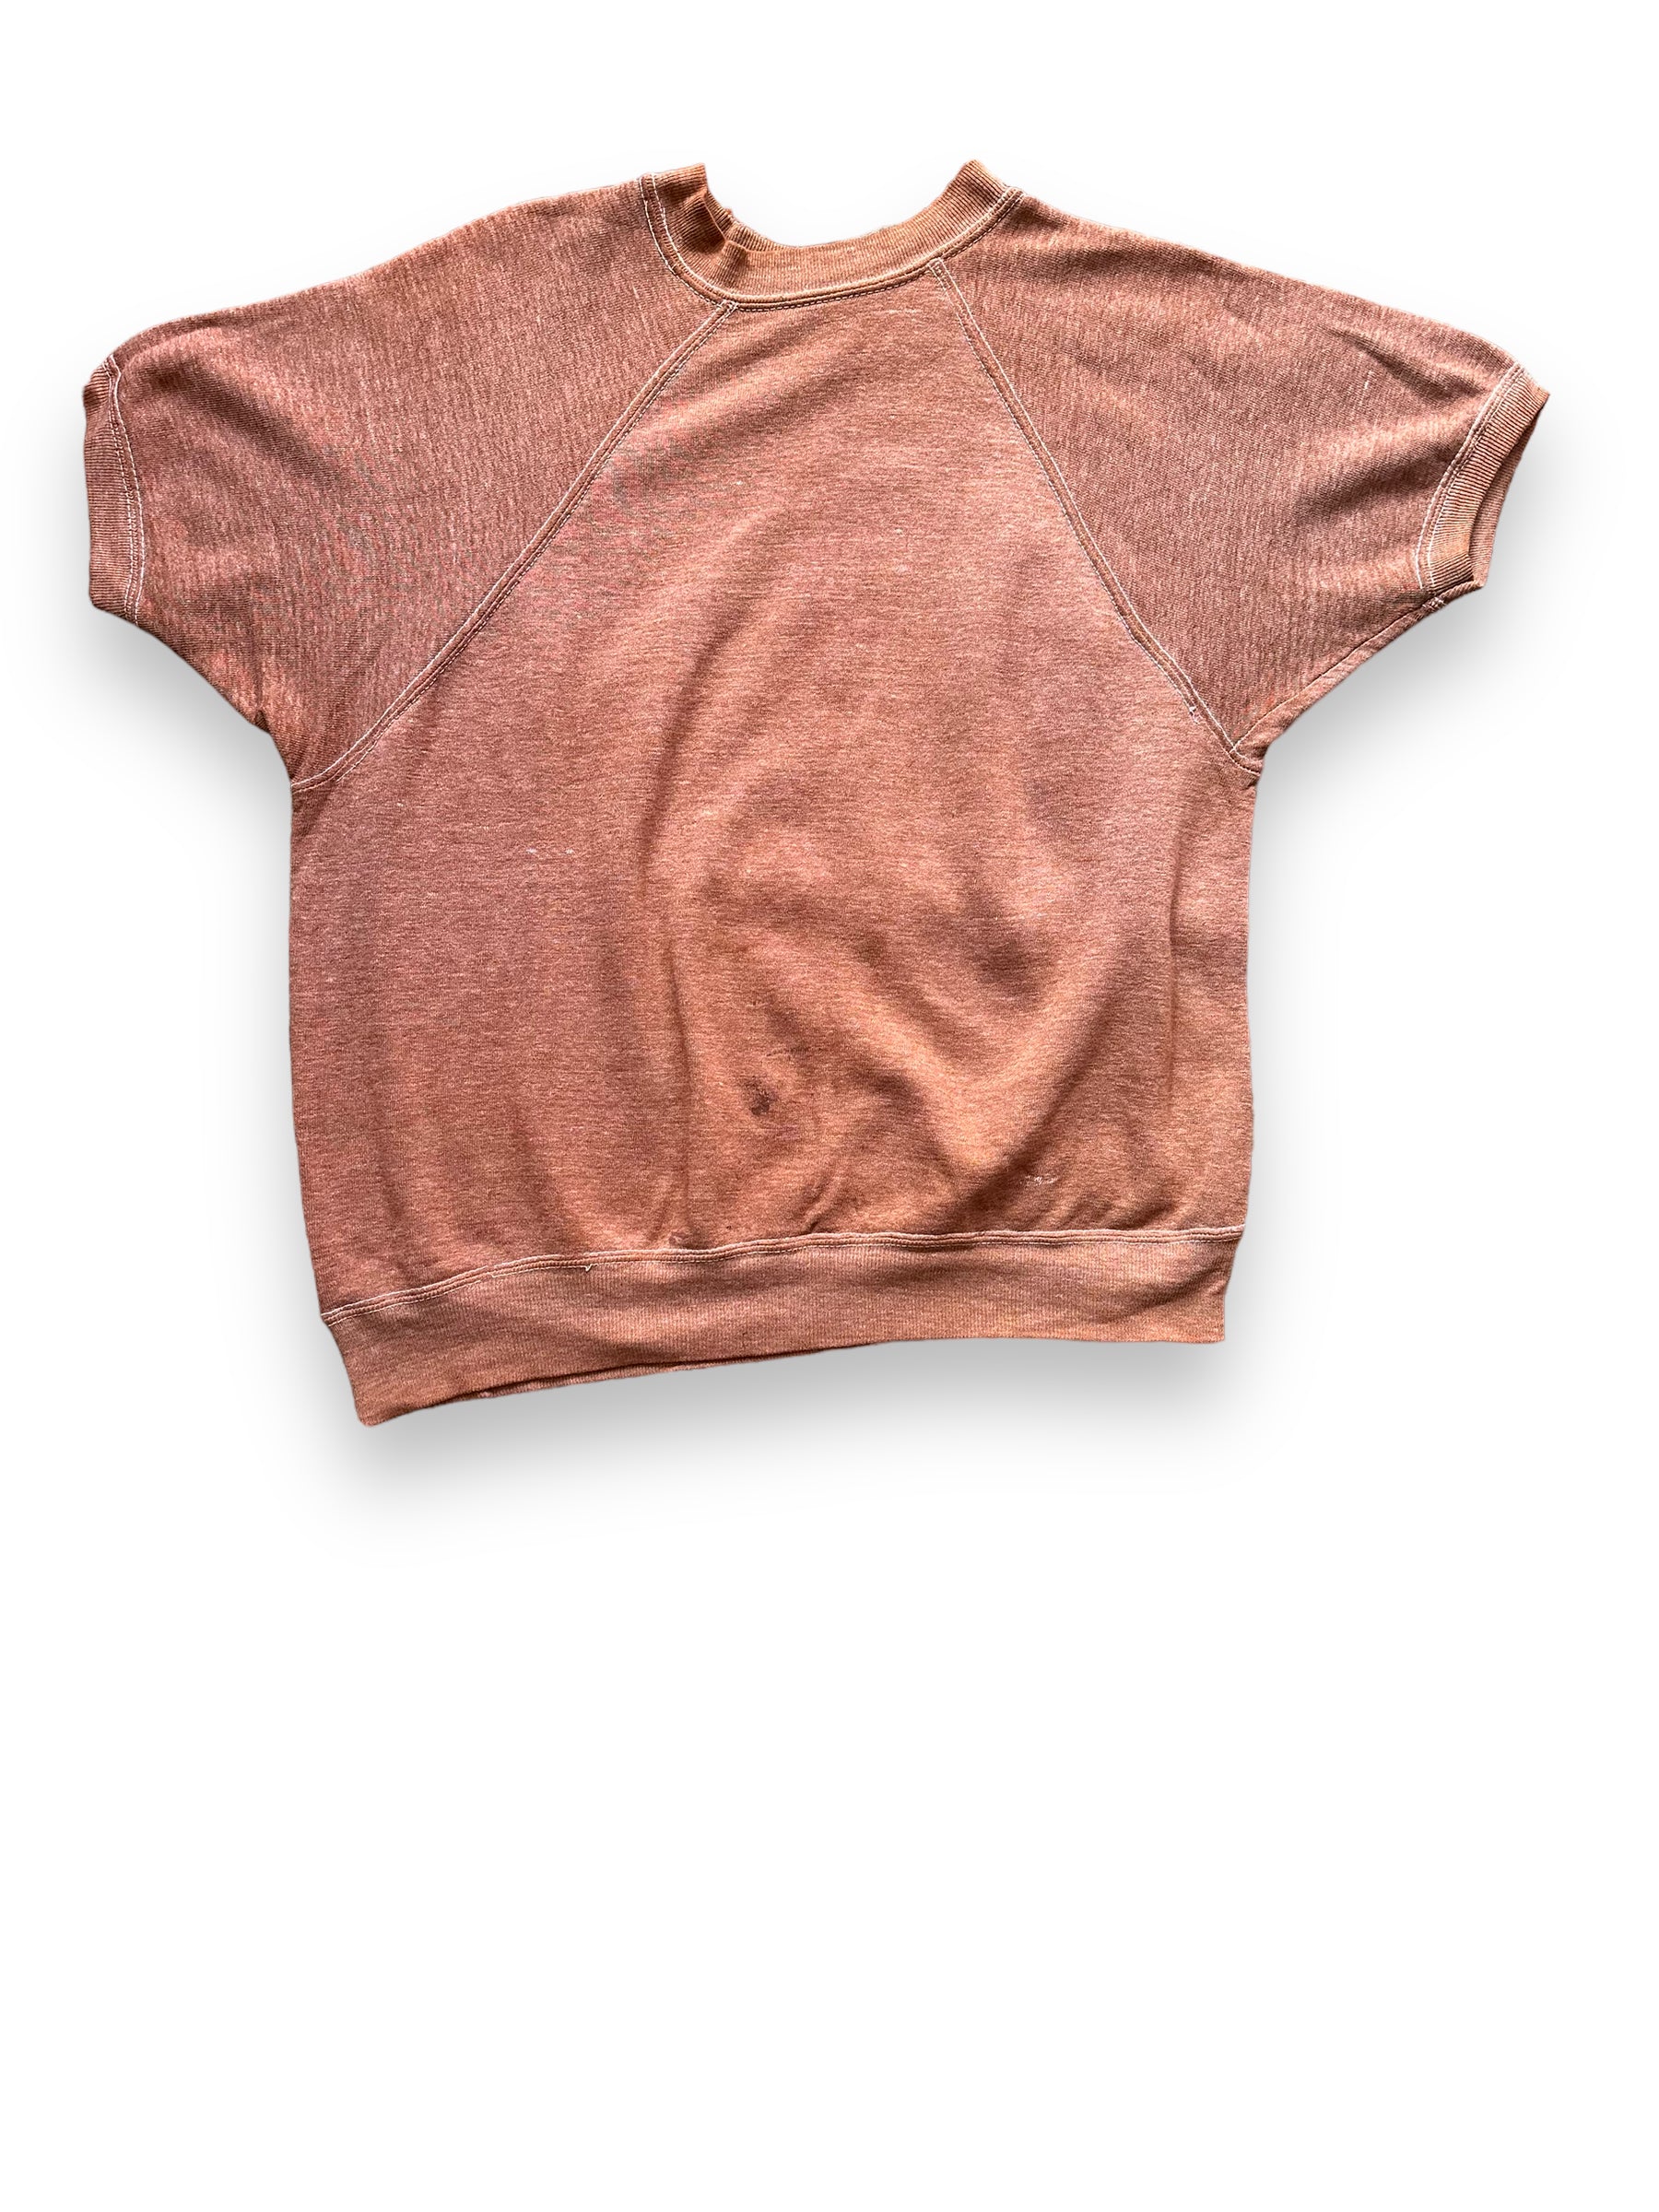 Front View of Vintage Brown Short Sleeve Crewneck Sweatshirt SZ M | Barn Owl Vintage Clothing | Seattle Vintage Sweatshirts